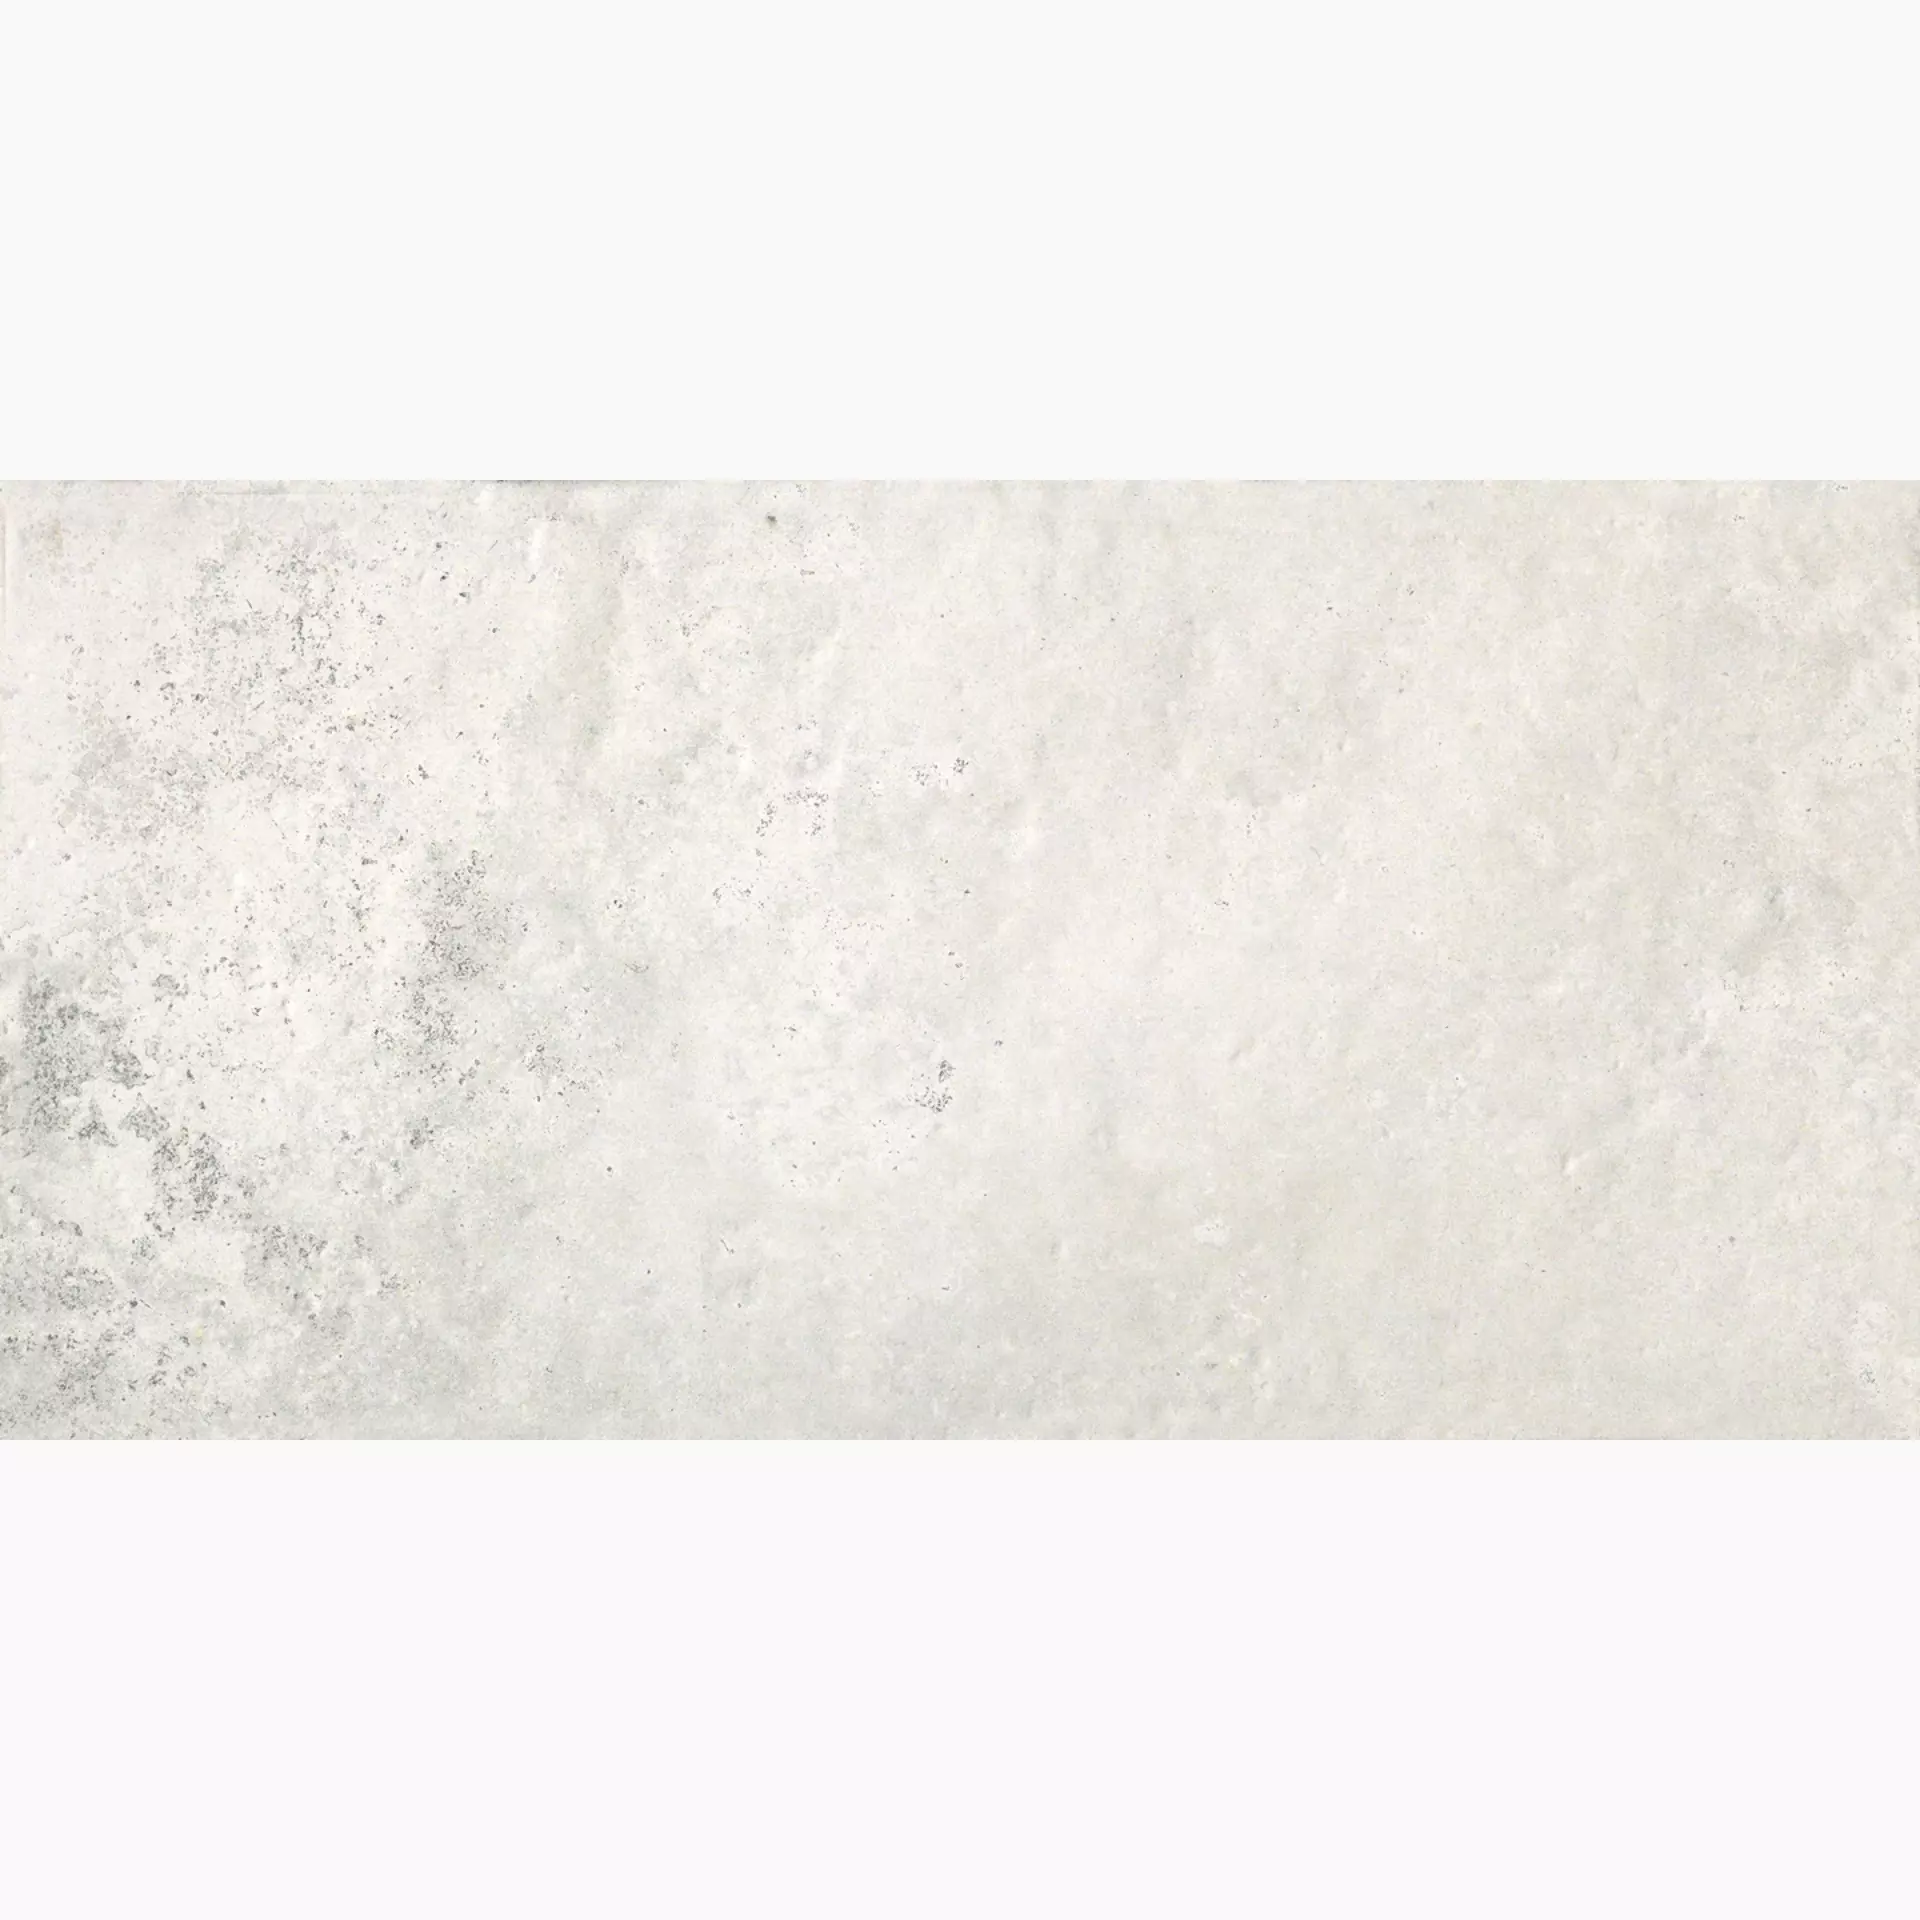 Sichenia Chambord Bianco Naturale CHBR611 60x120cm rectified 10mm